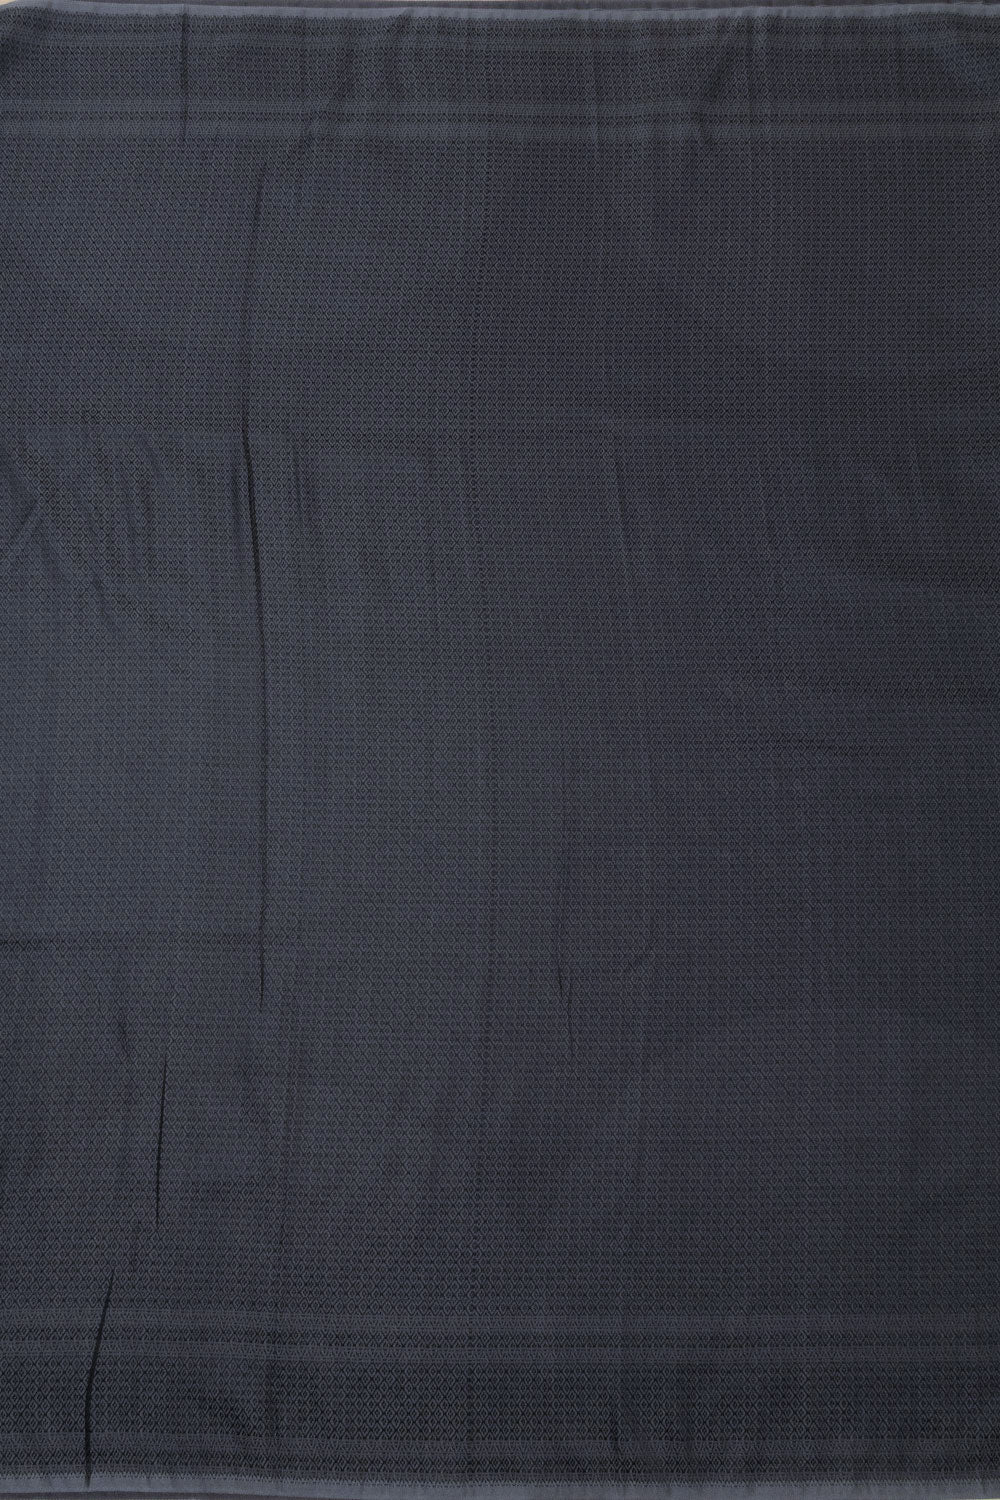 Dark Grey Handloom Himro Silk Saree - Avishya